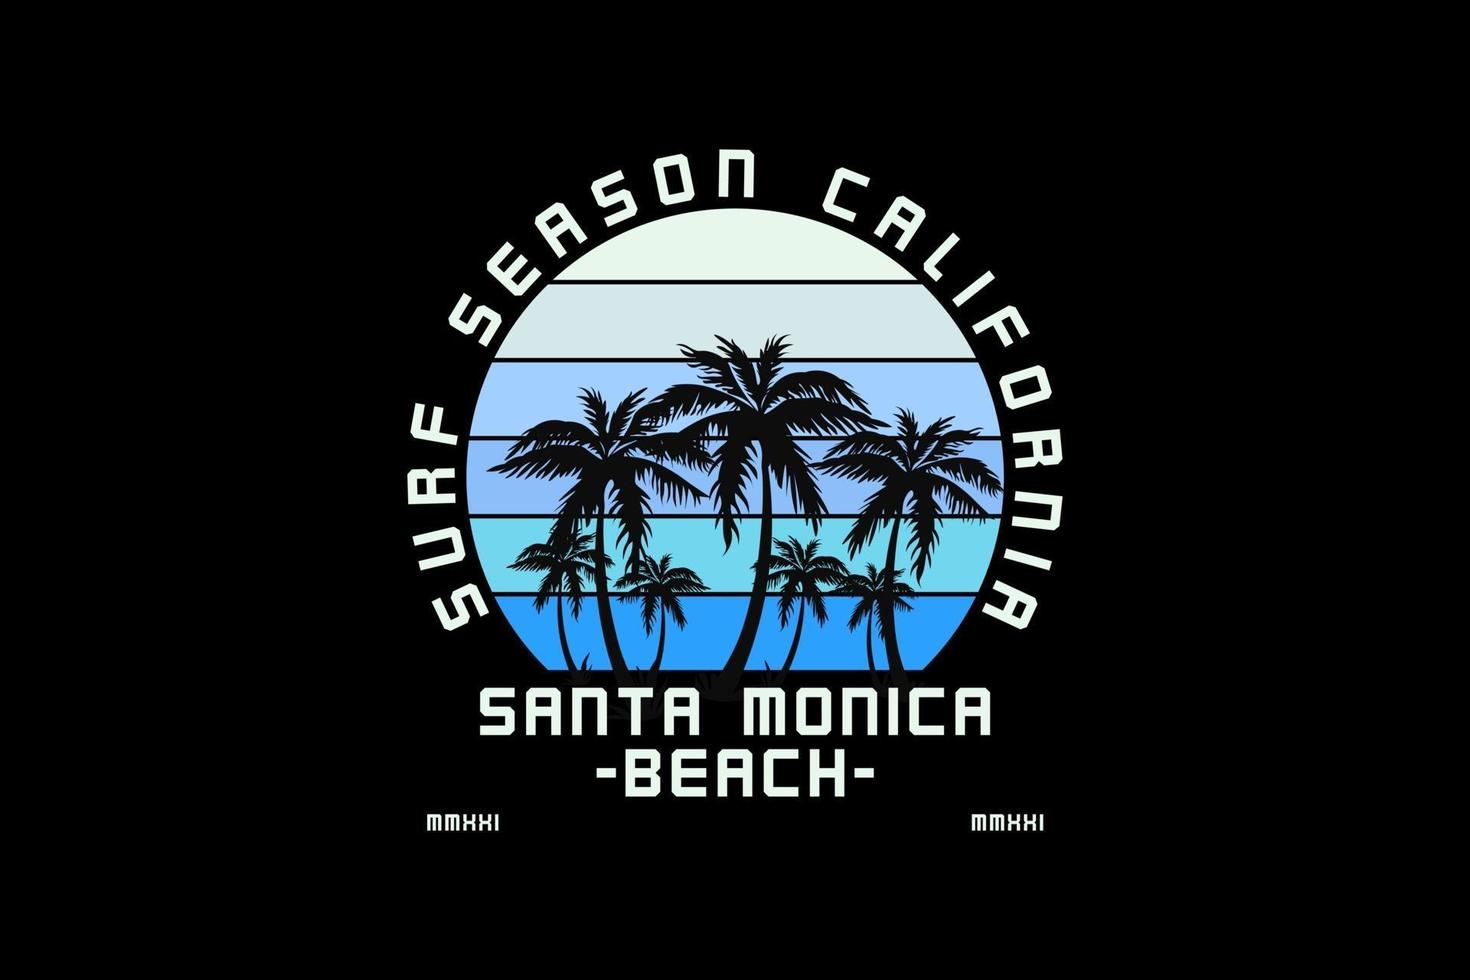 17.Surf season california, silhouette retro vintage style vector